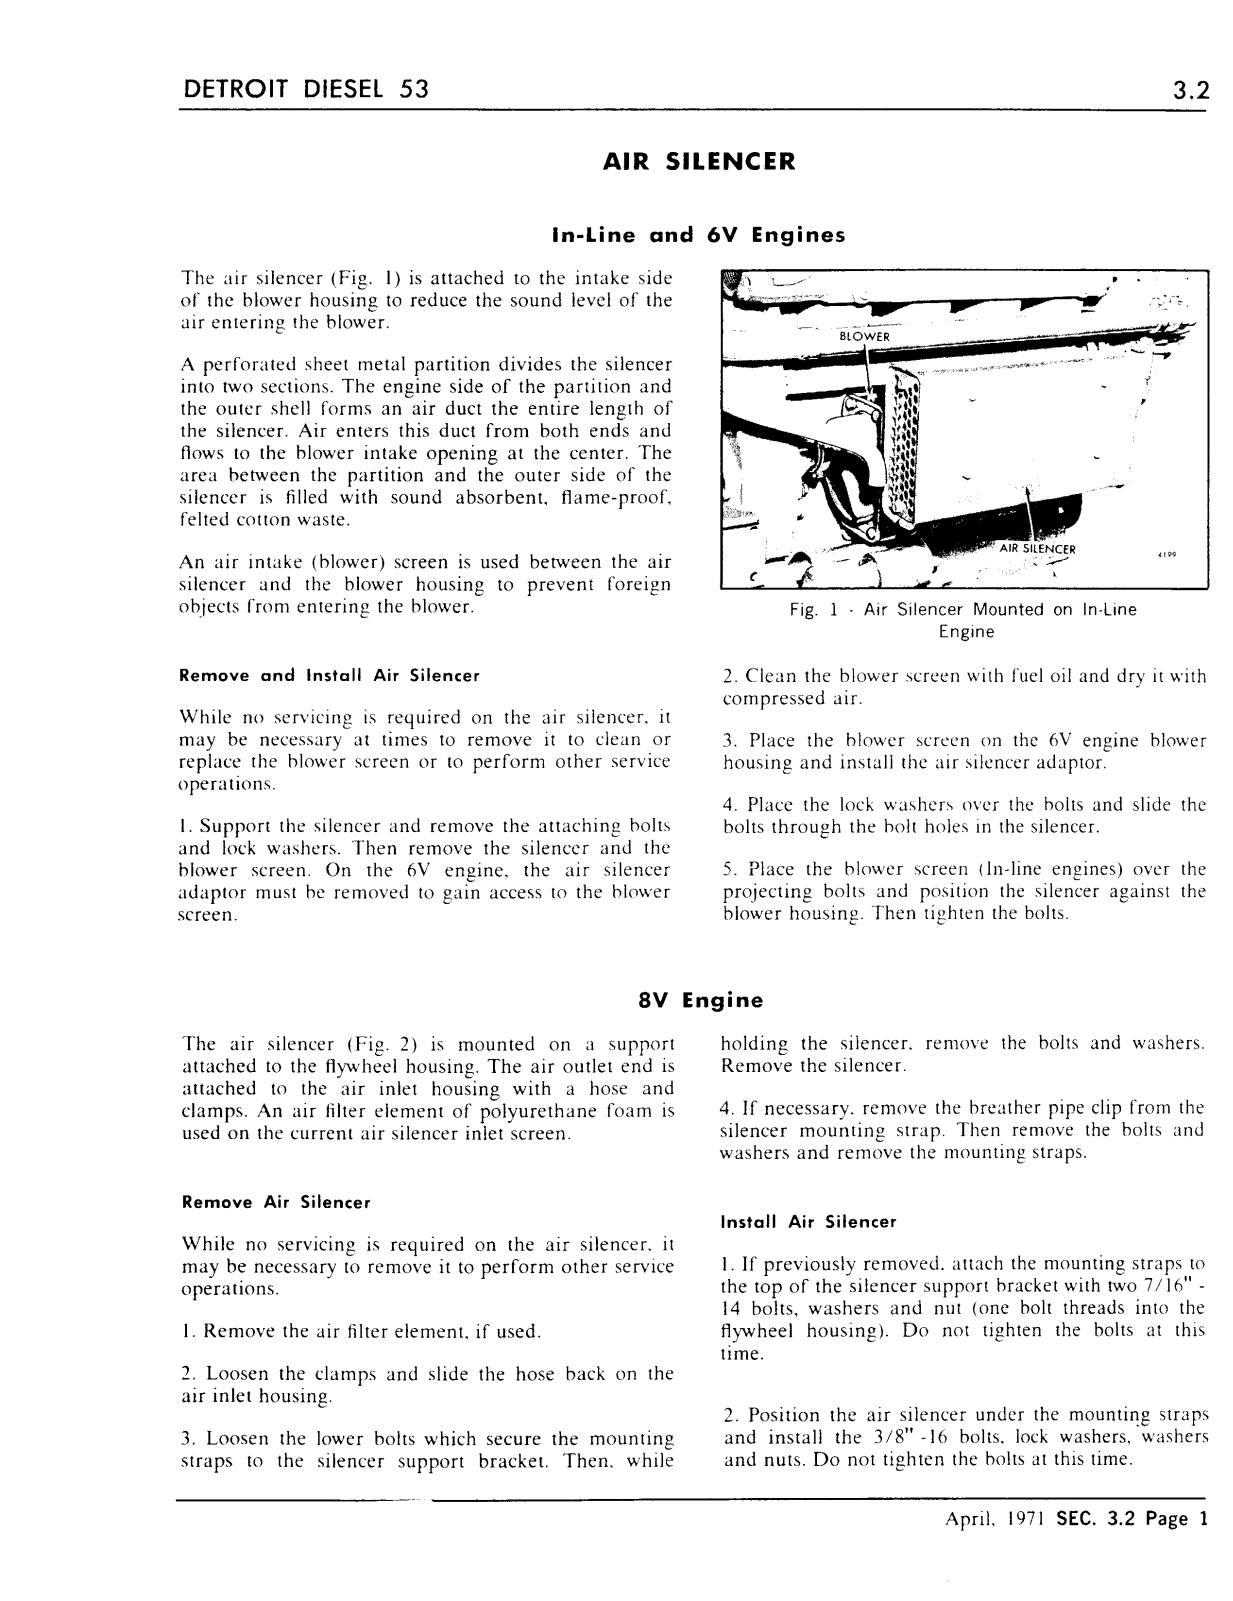 Detroit Diesel Engine 53 Service Manual